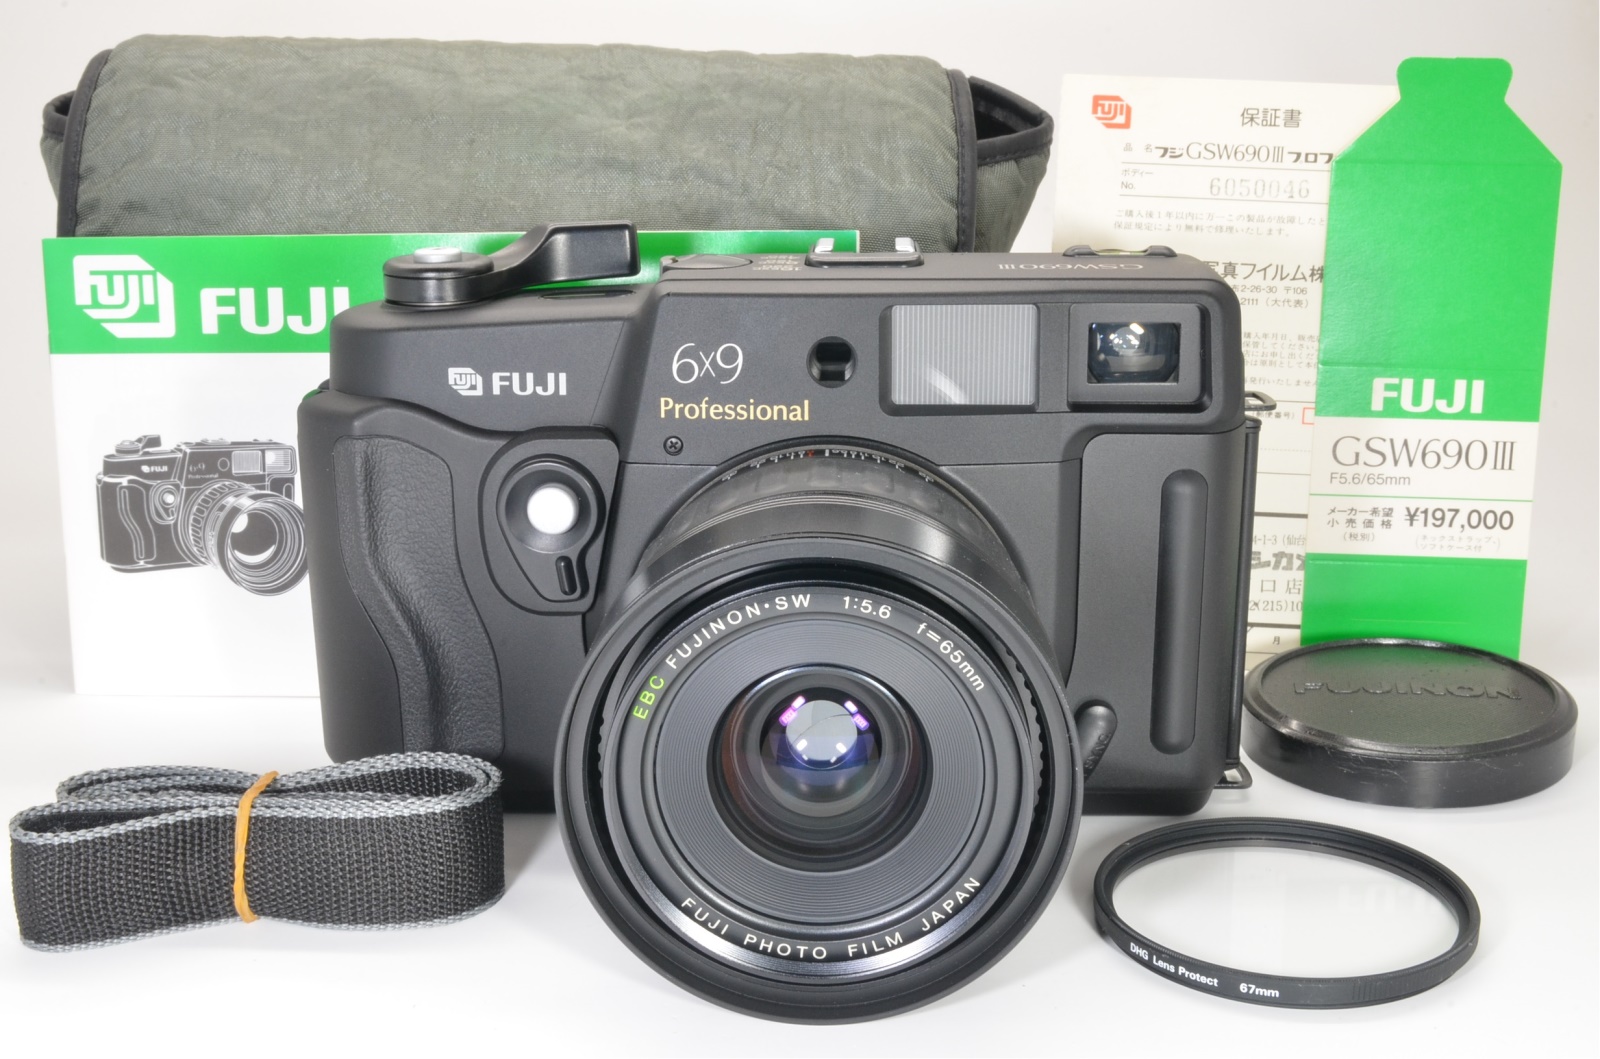 fuji fujifilm gsw690iii 65mm f5.6 count 016 medium format camera shooting tested